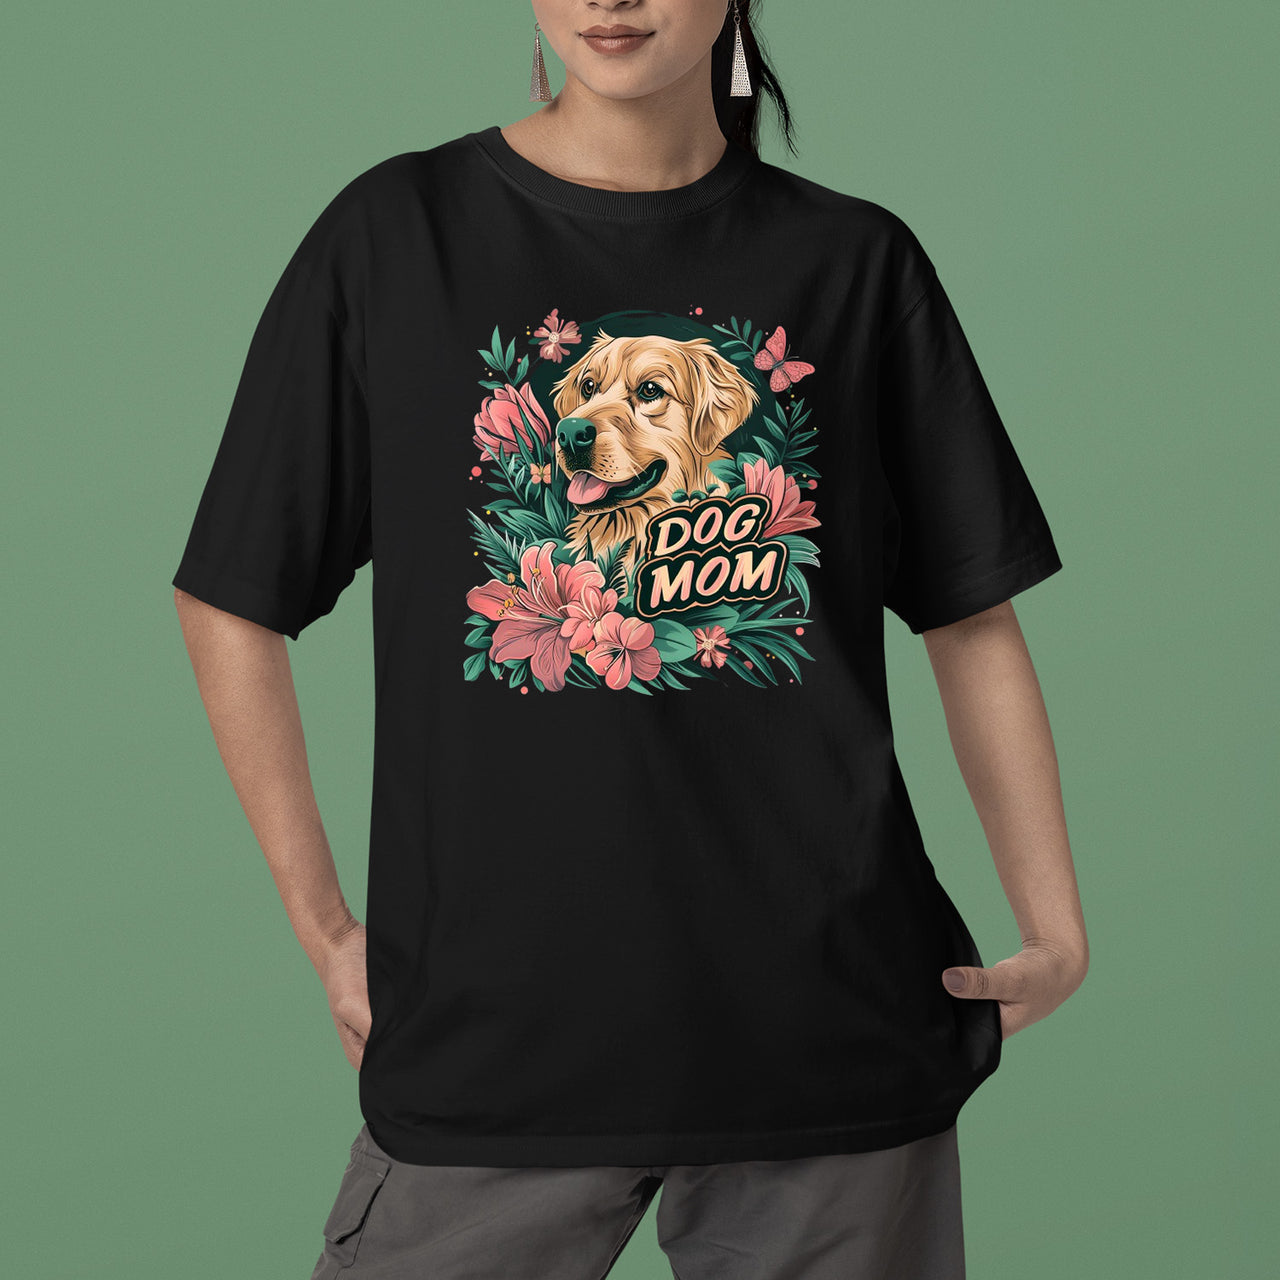 Labrador Retriever Dog T-shirt, Pet Lover Shirt, Dog Lover Shirt, Dog Mom T-Shirt, Dog Owner Shirt, Gift For Dog Mom, Funny Dog Shirts, Women Dog T-Shirt, Mother's Day Gift, Dog Lover Wife Gifts, Dog Shirt